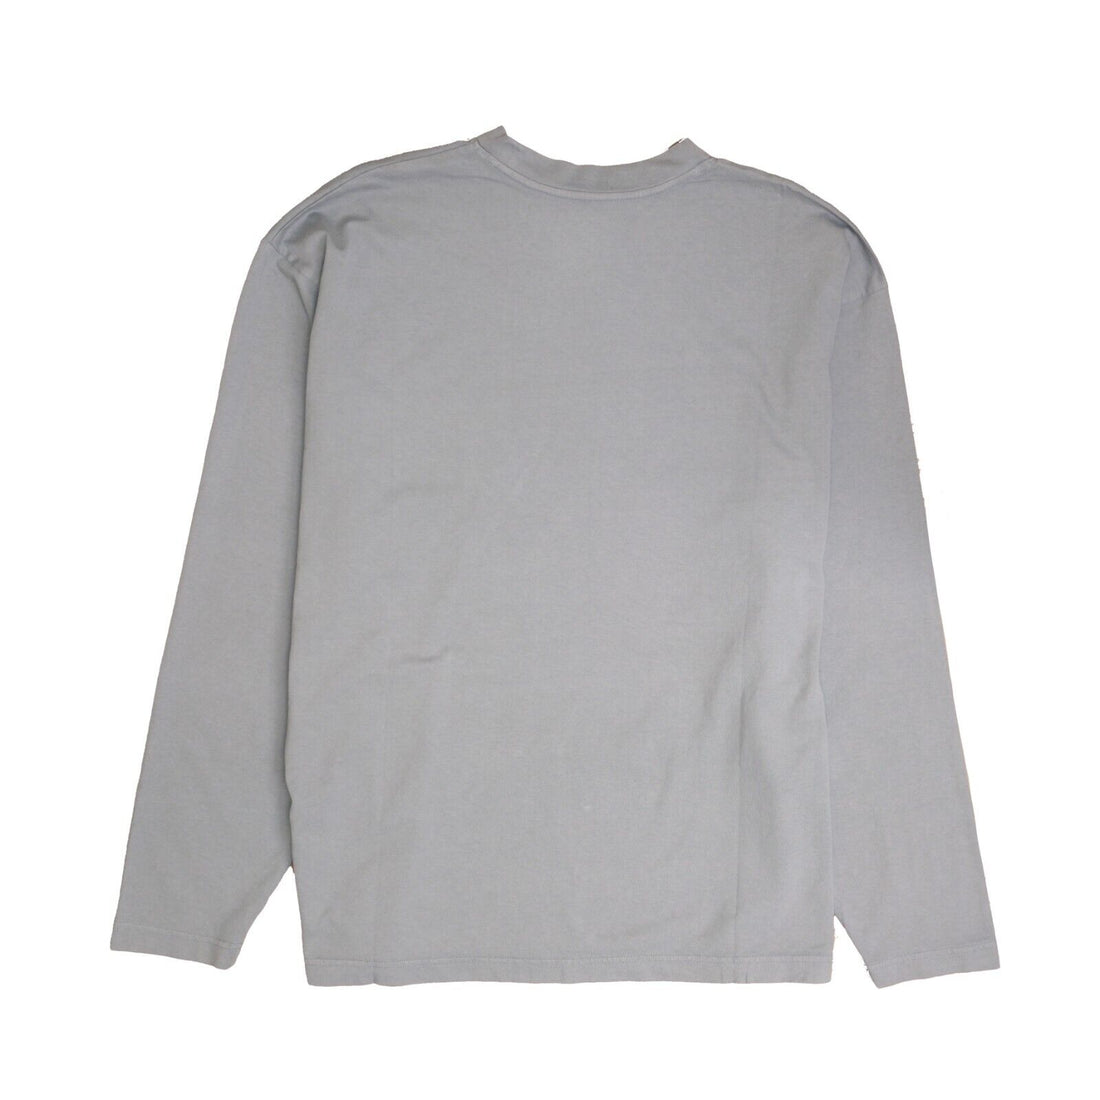 Yeezy Gap Unreleased Long Sleeve T-Shirt Size 2XL Gray